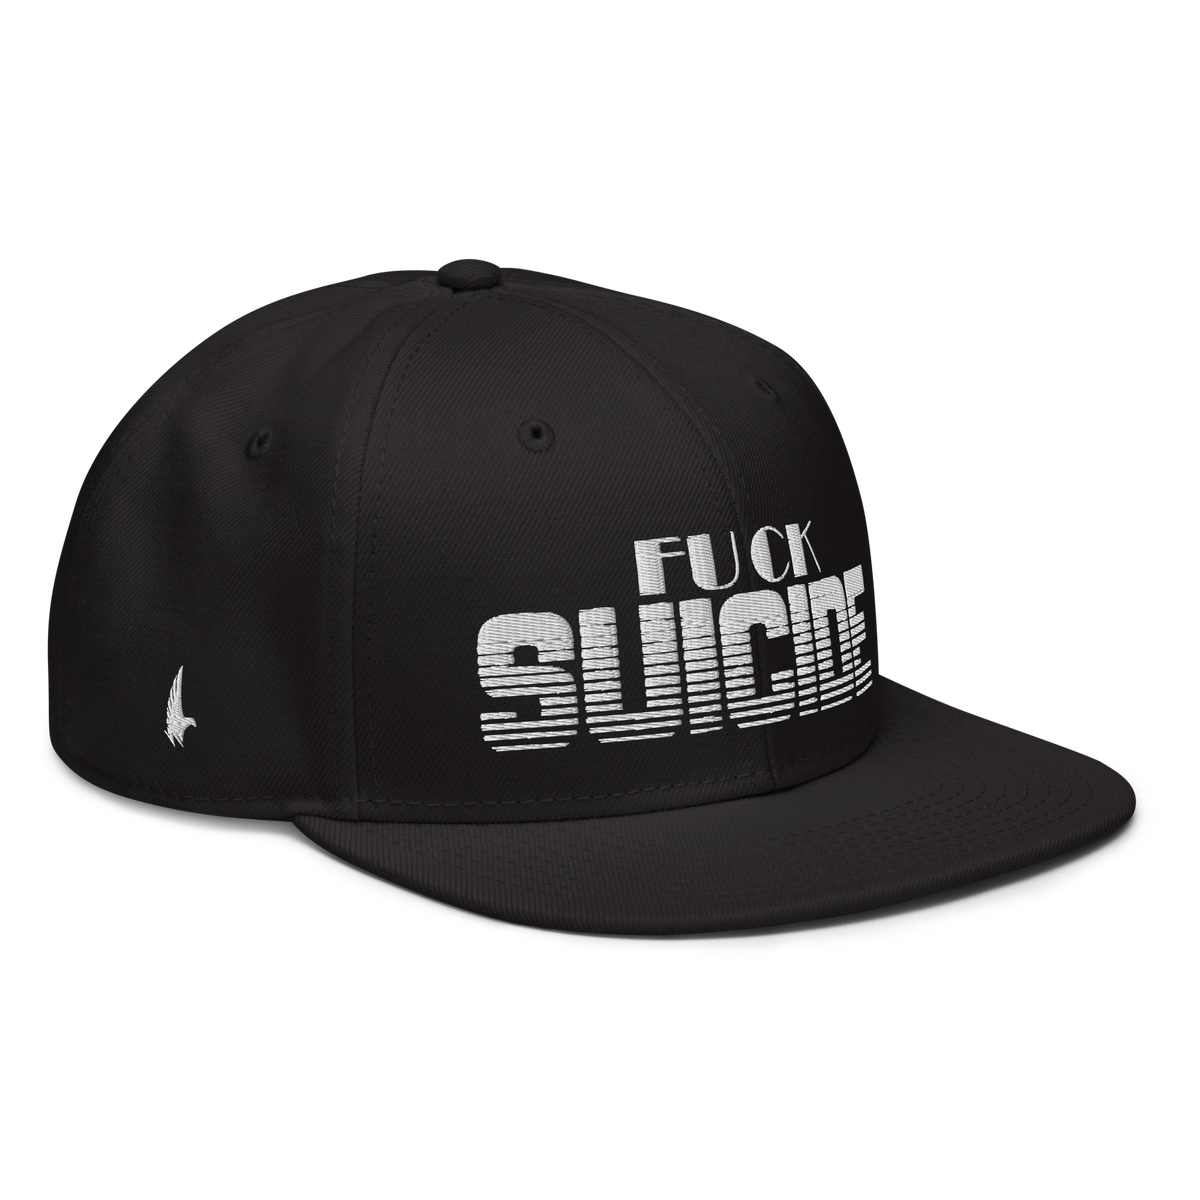 Fk Suicide Snapback Hat - Black OS - Loyalty Vibes